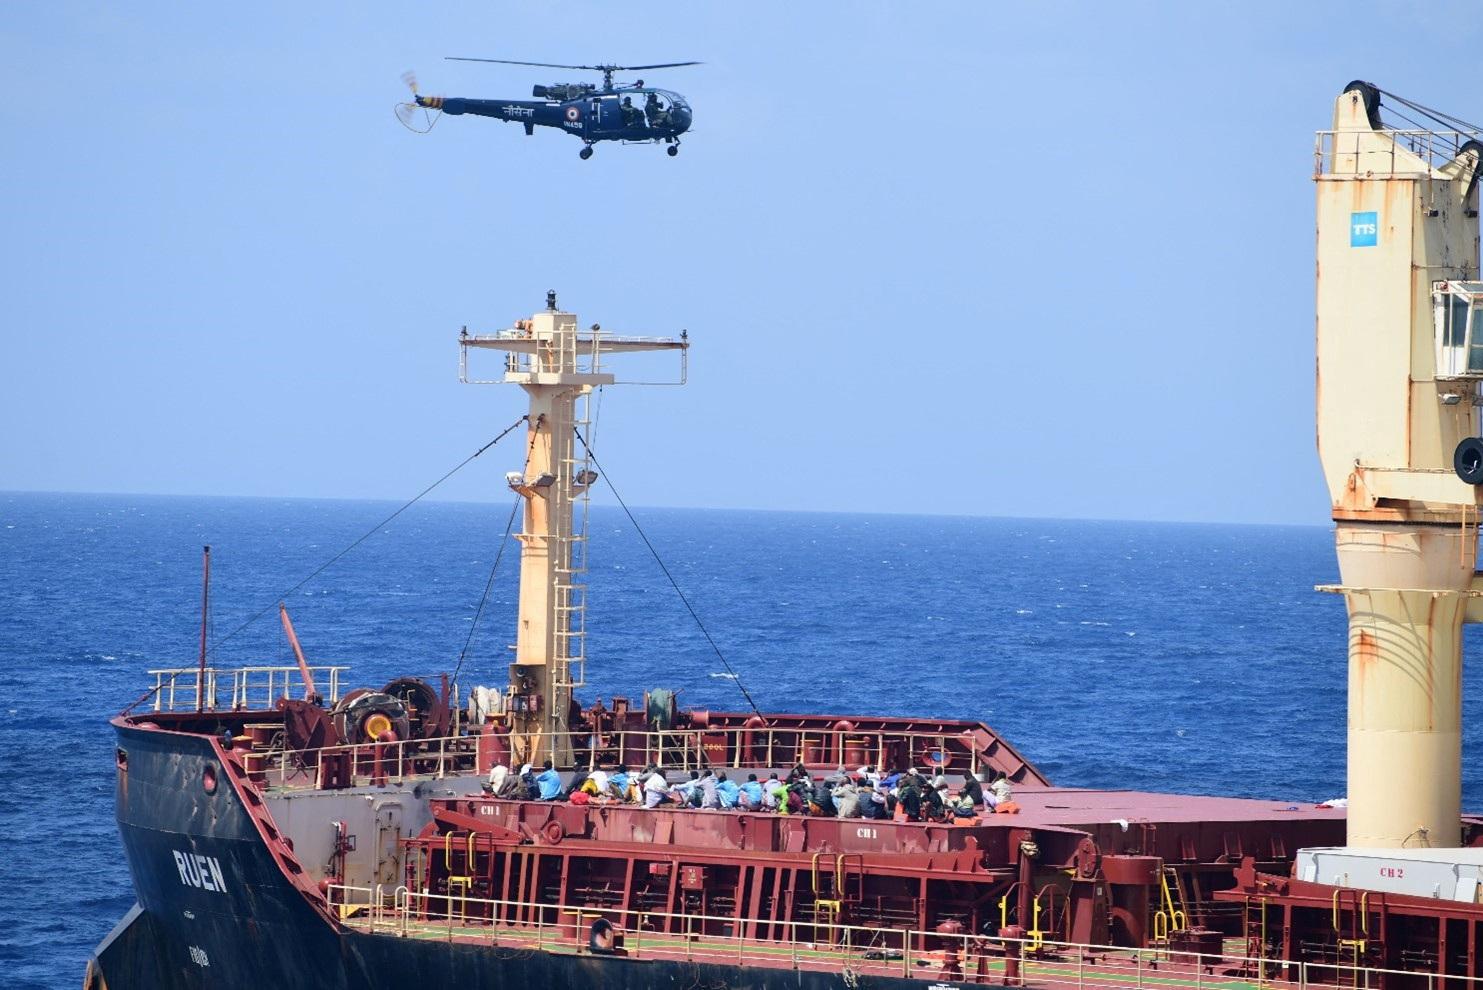 Somali pirates hijack cargo ship, Indian Navy rescues it